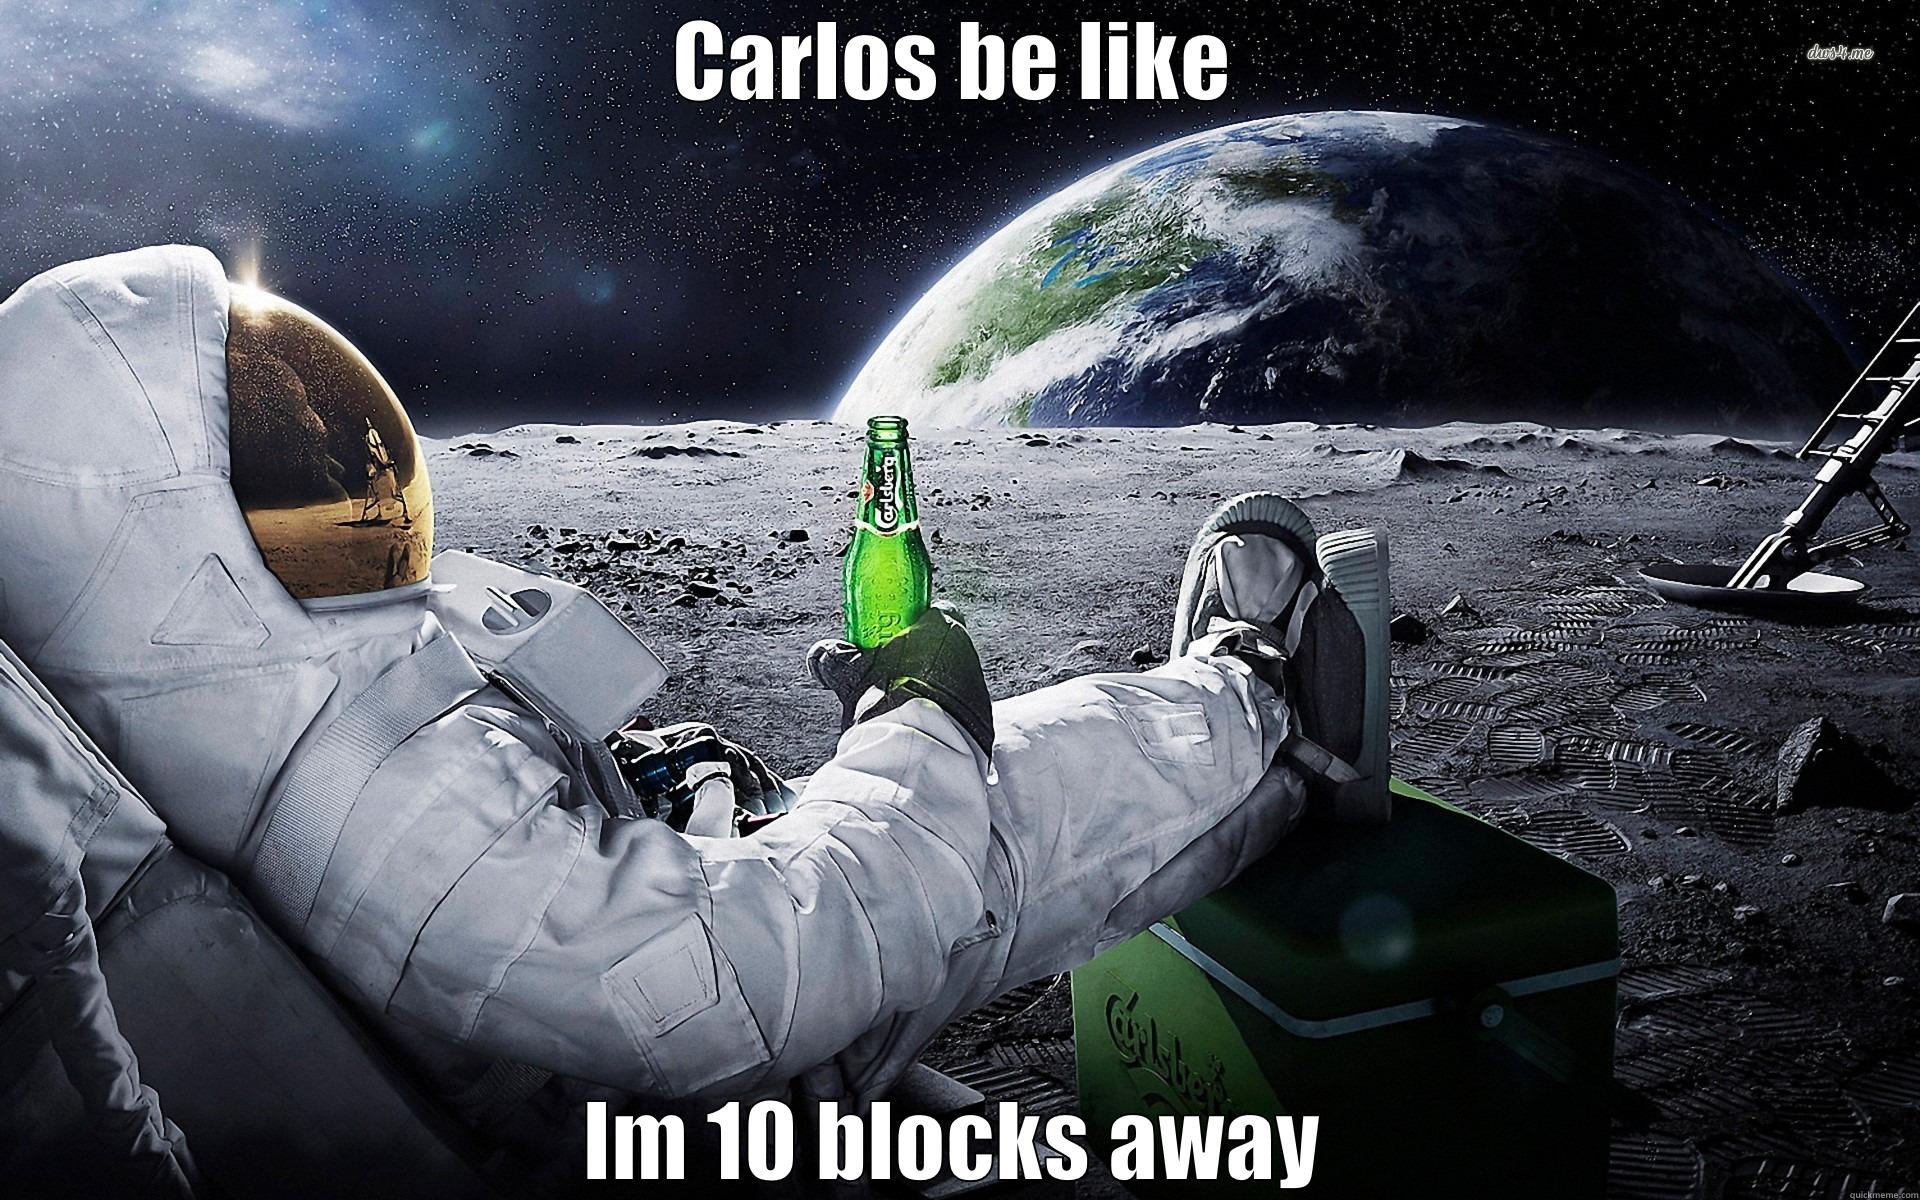 Carlos be like 10 blocks away - CARLOS BE LIKE IM 10 BLOCKS AWAY Misc